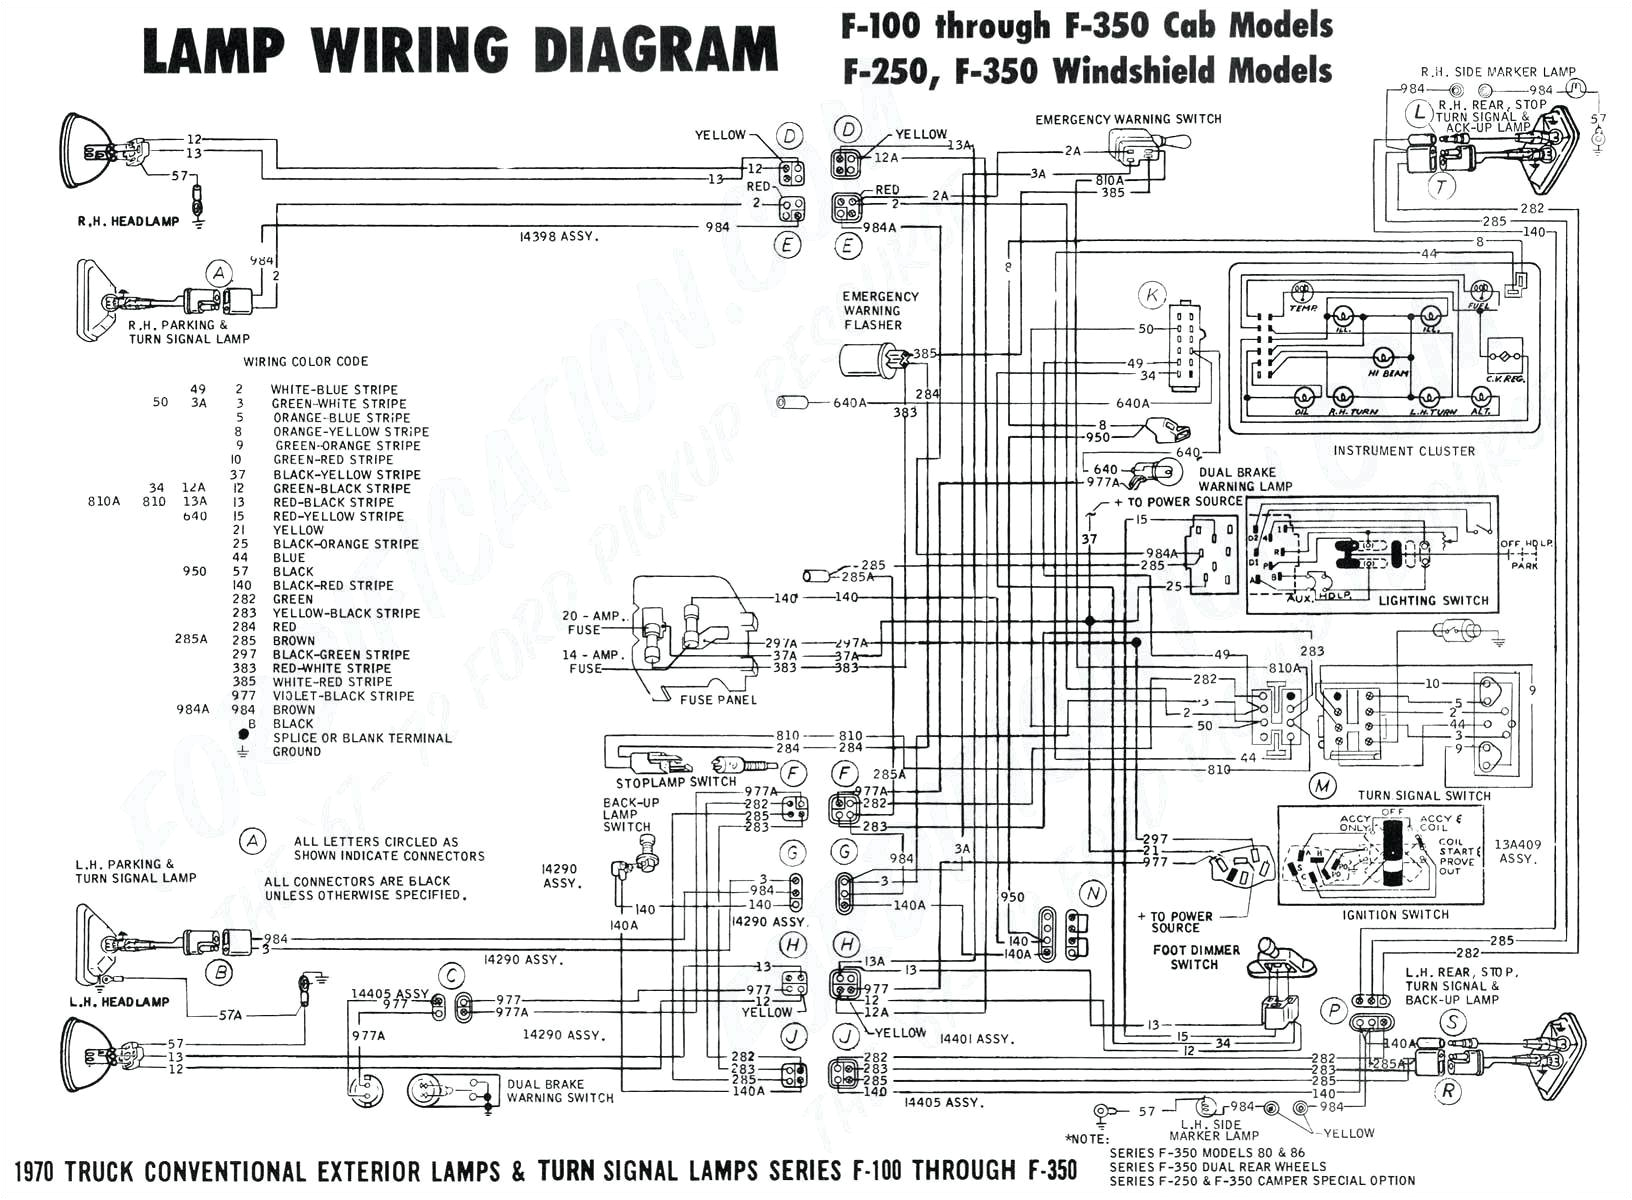 ihc wiring diagram wiring diagram centre harvester electric motor wiring diagram